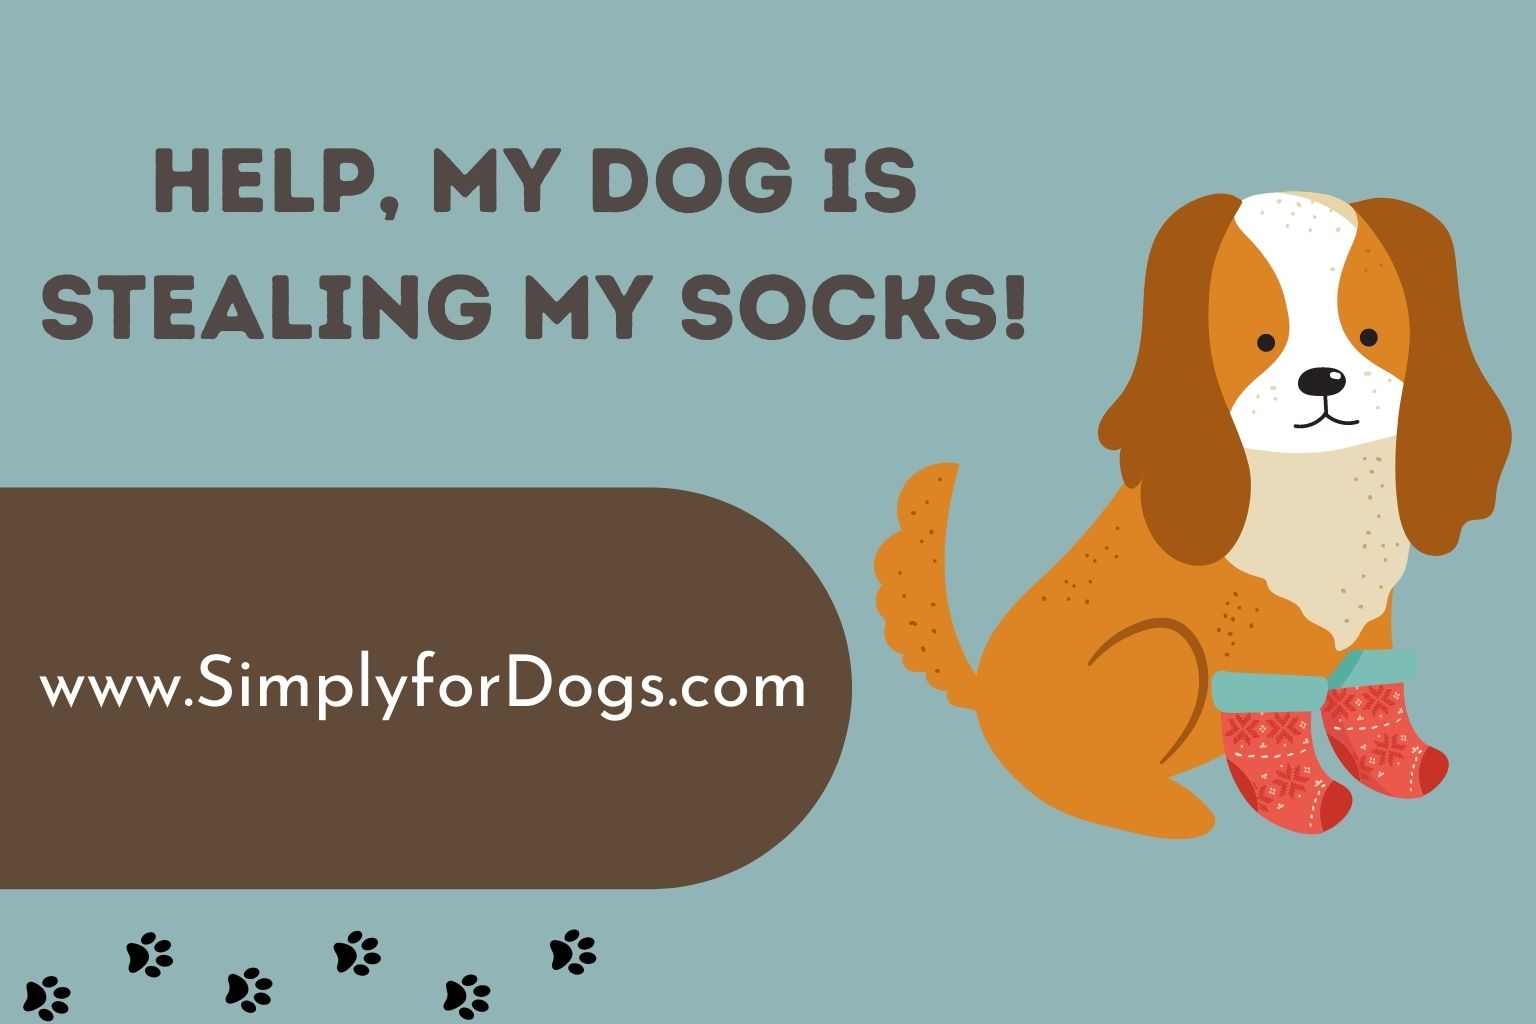 Help, My Dog is Stealing My Socks!